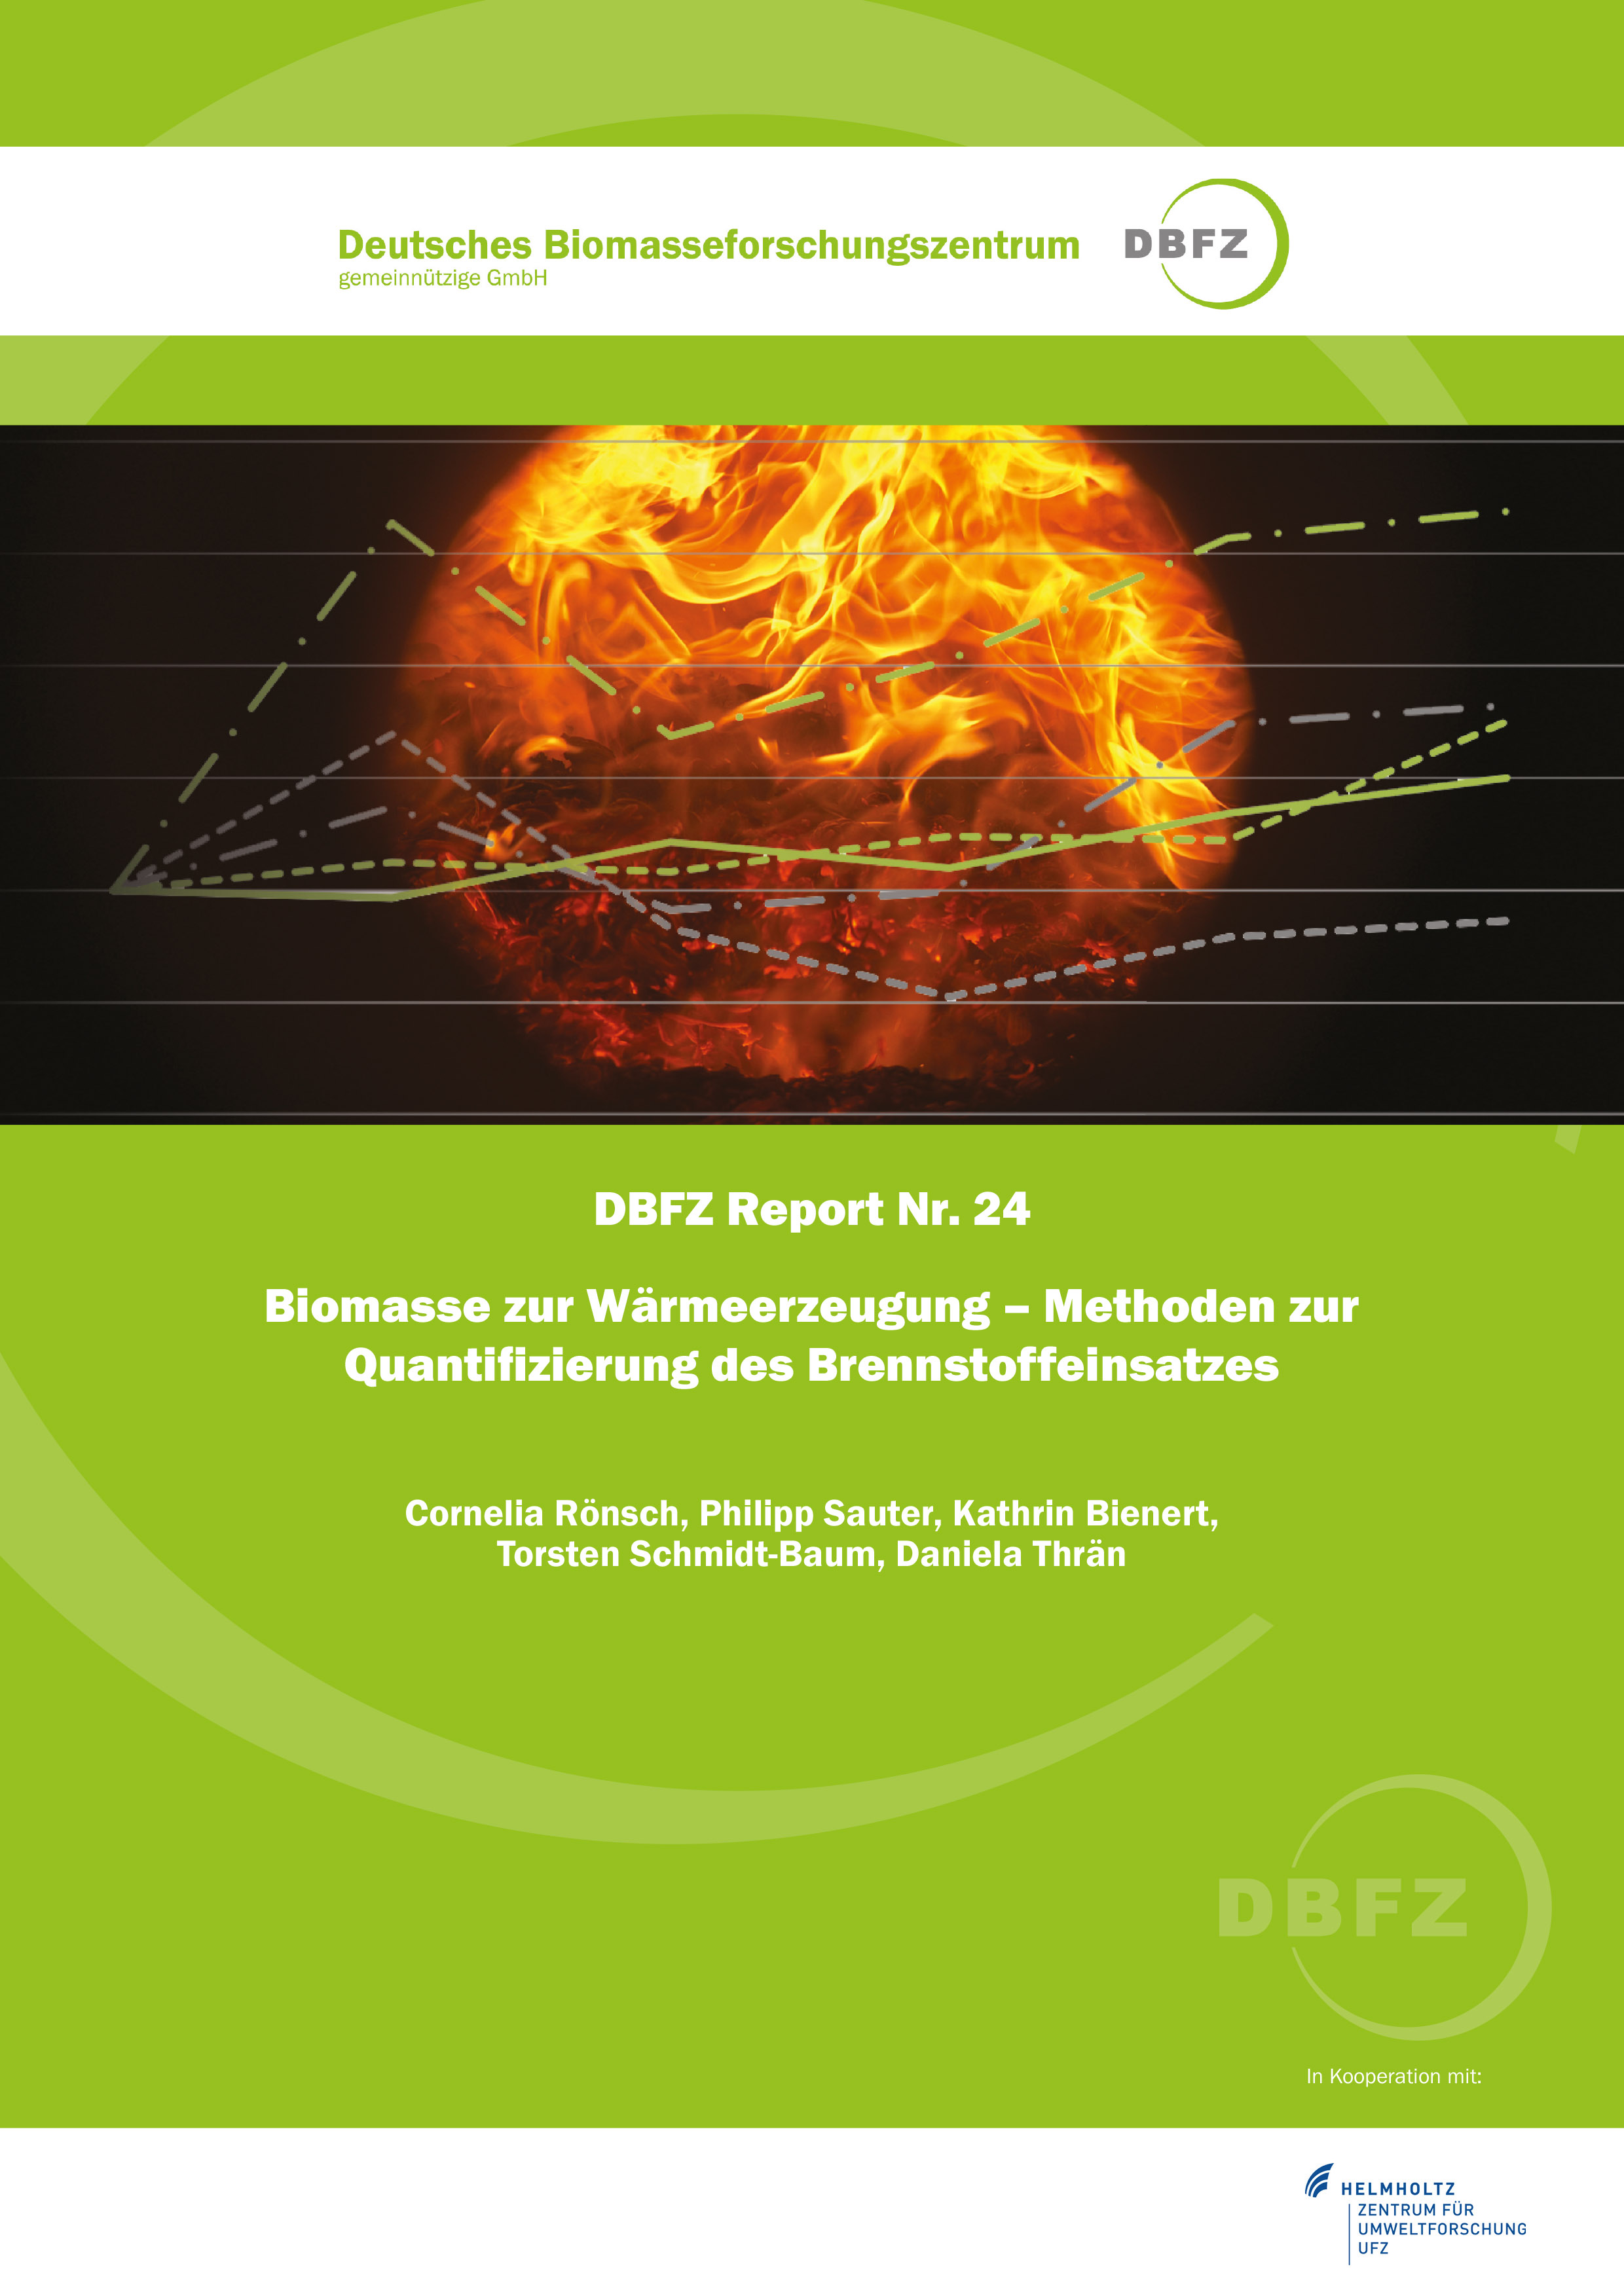 DBFZ Report No. 24